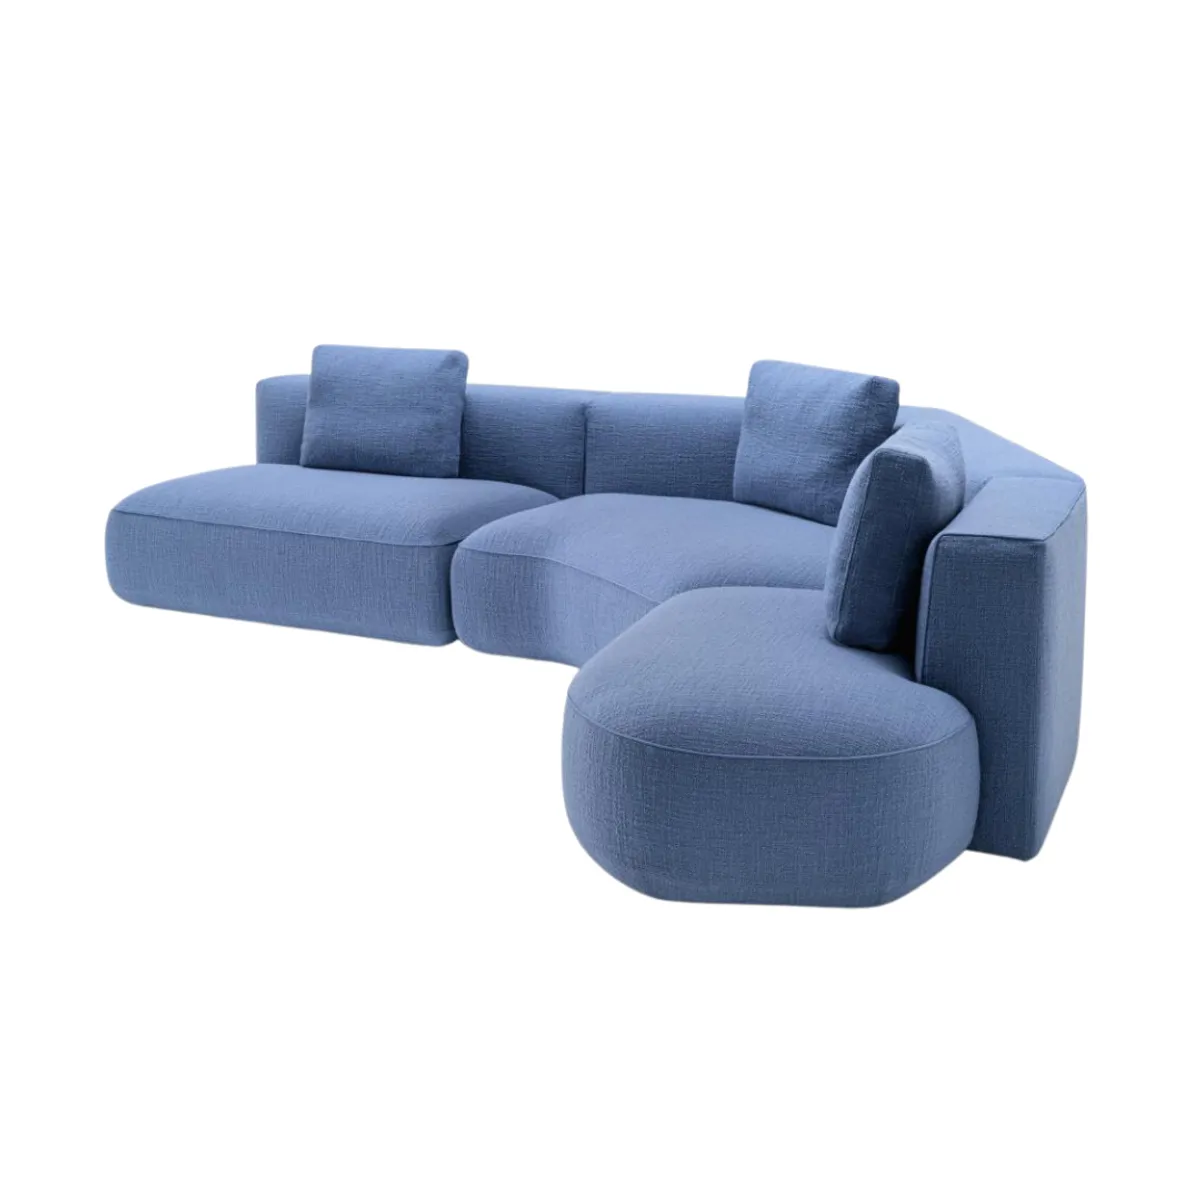 Jeff modular corner sofa 4